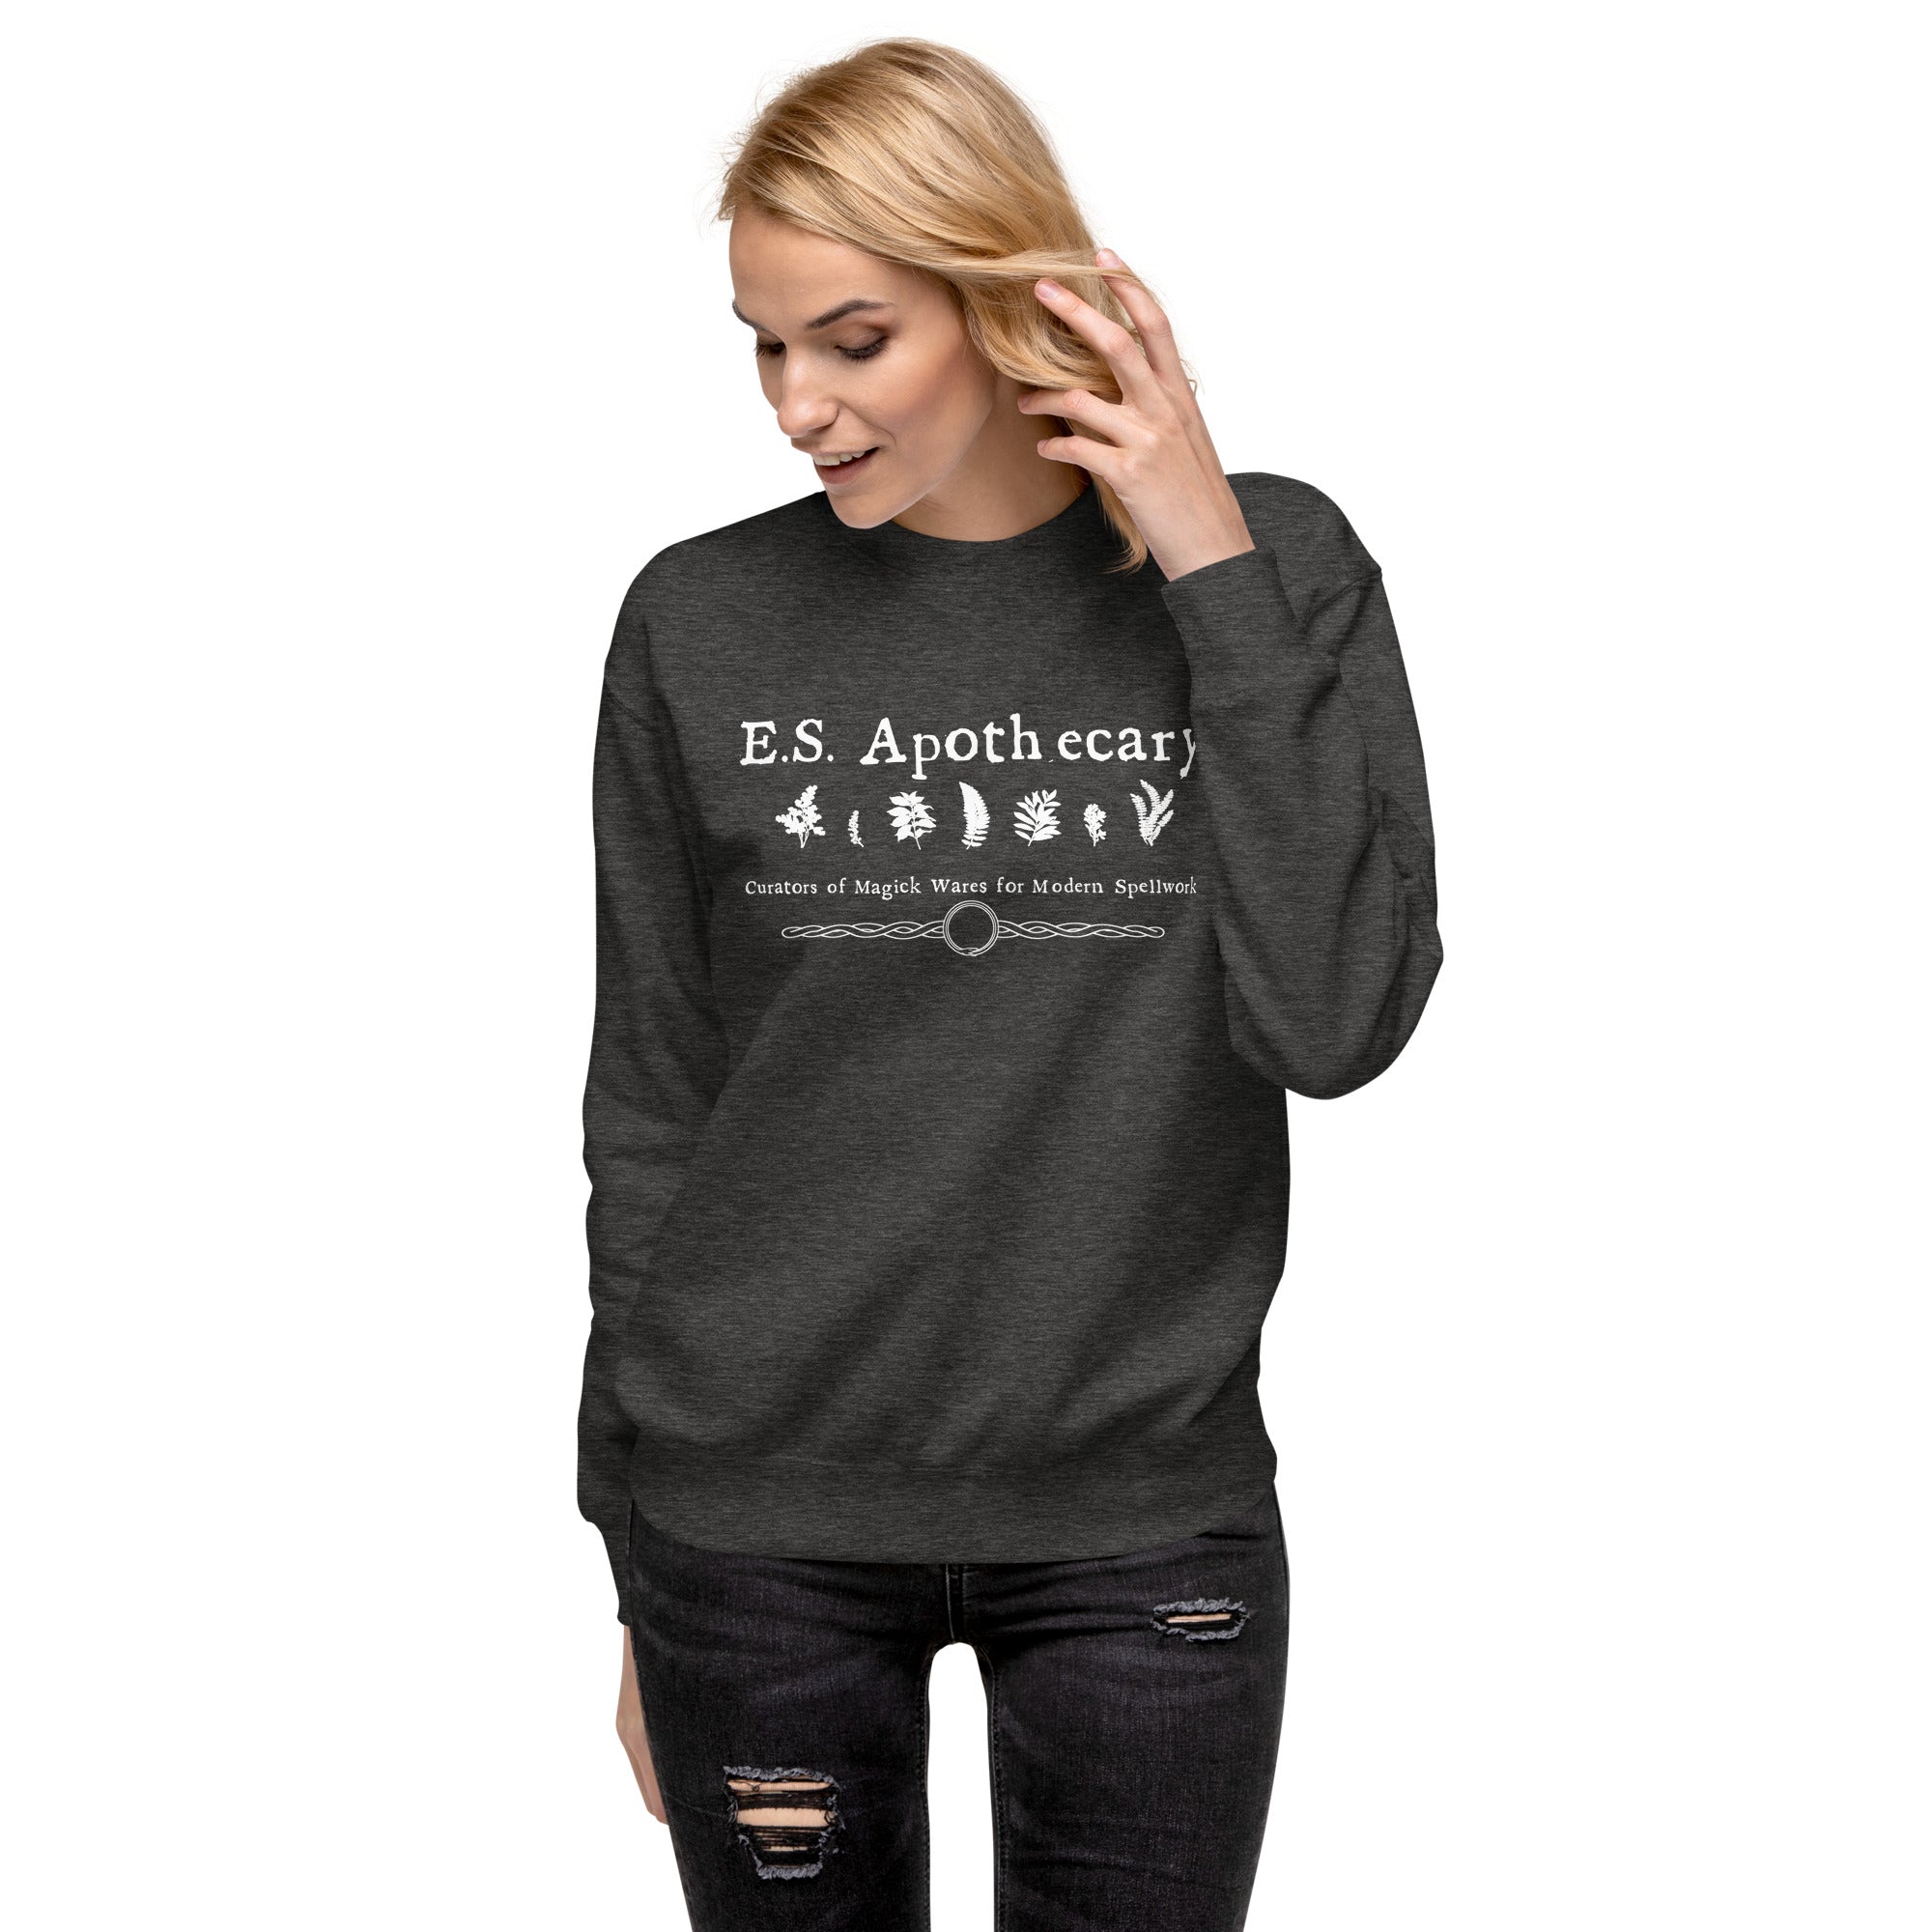 E.S. Apothecary - Unisex Premium Sweatshirt - Earthly Secrets